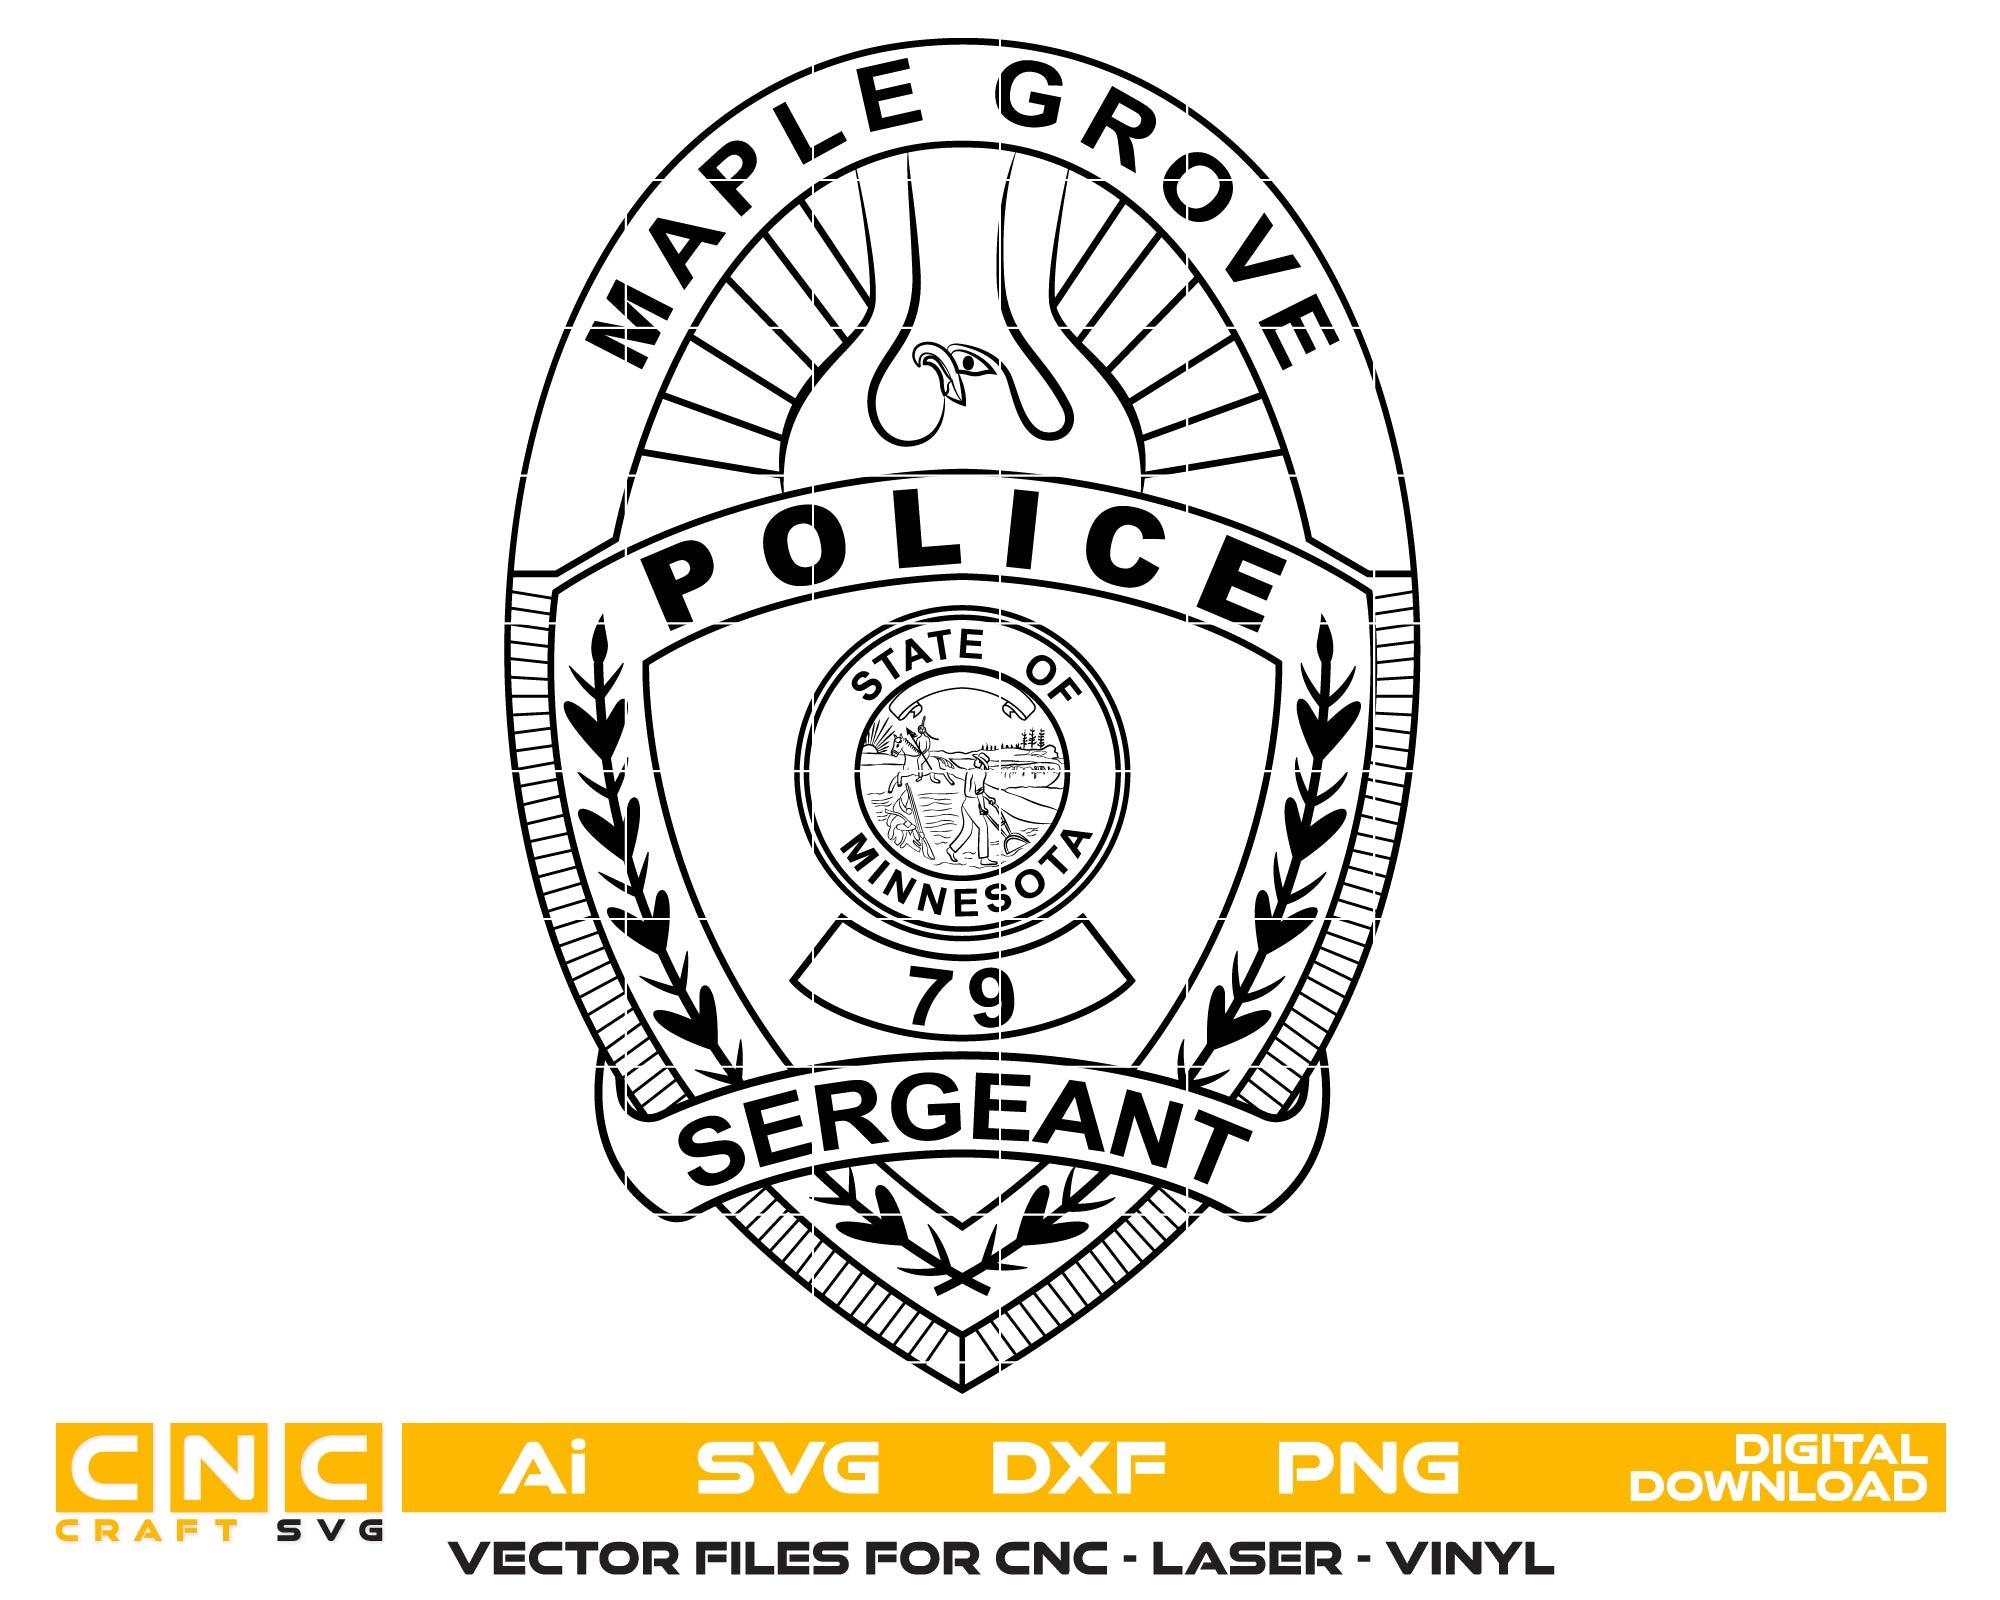 Maple Grove Police Sergeant Badge, Minnesota Vector Art, Ai,SVG, DXF, PNG, Digital Files